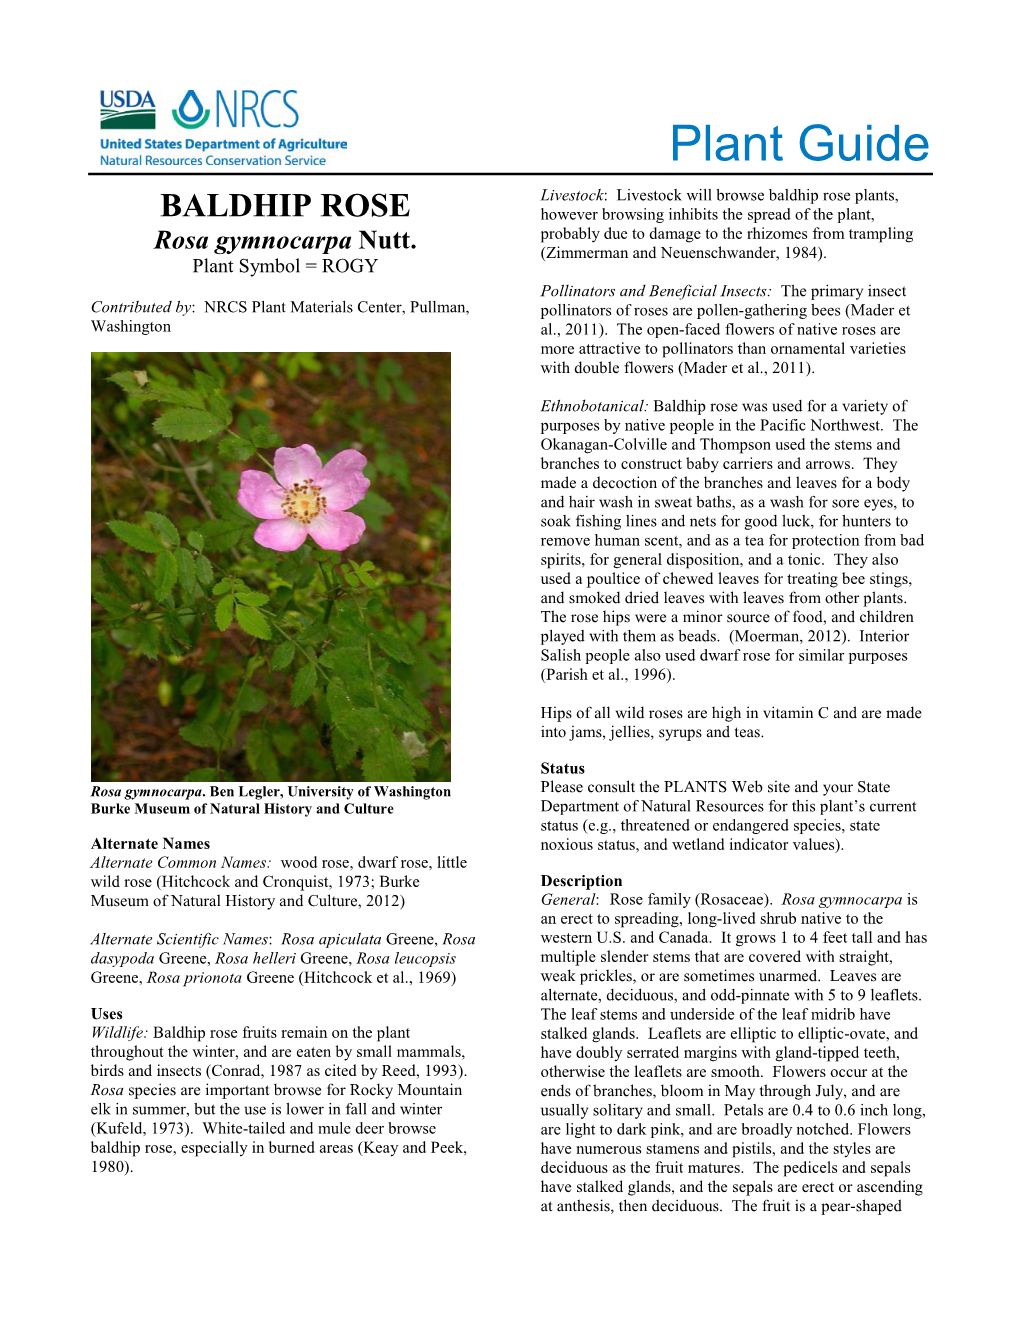 Dwarf Rose Plant Guide